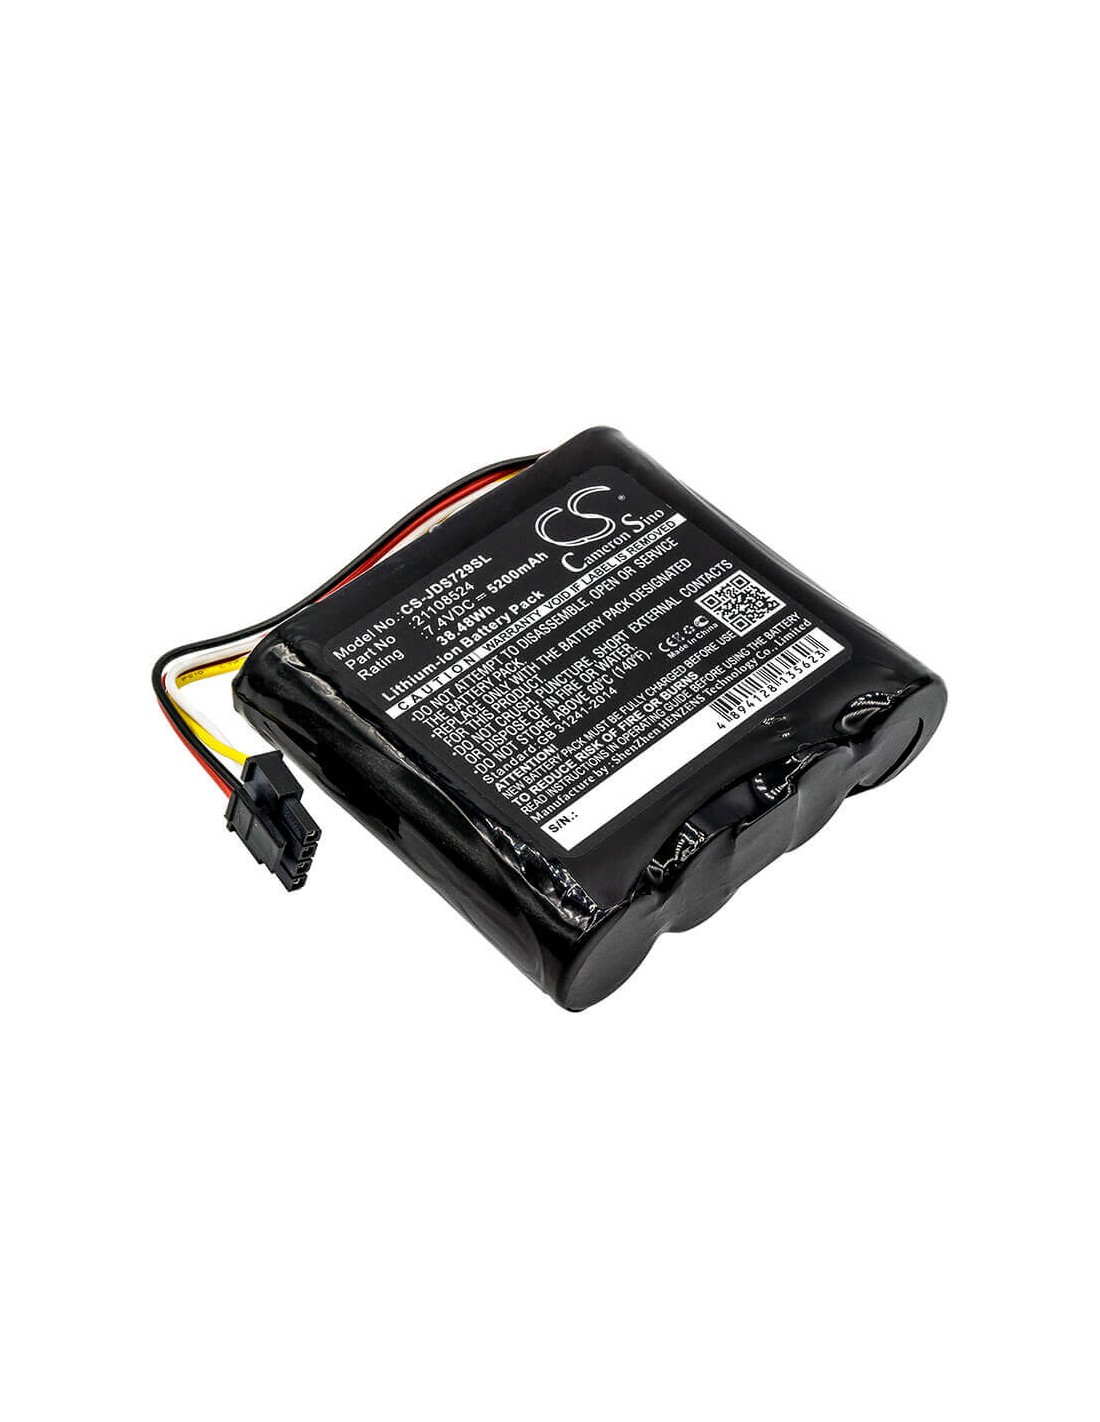 Battery for Jdsu 21129596 000, 21100729 000, Wifi Advisor Wireless Lan Analyzer 7.4V, 5200mAh - 38.48Wh